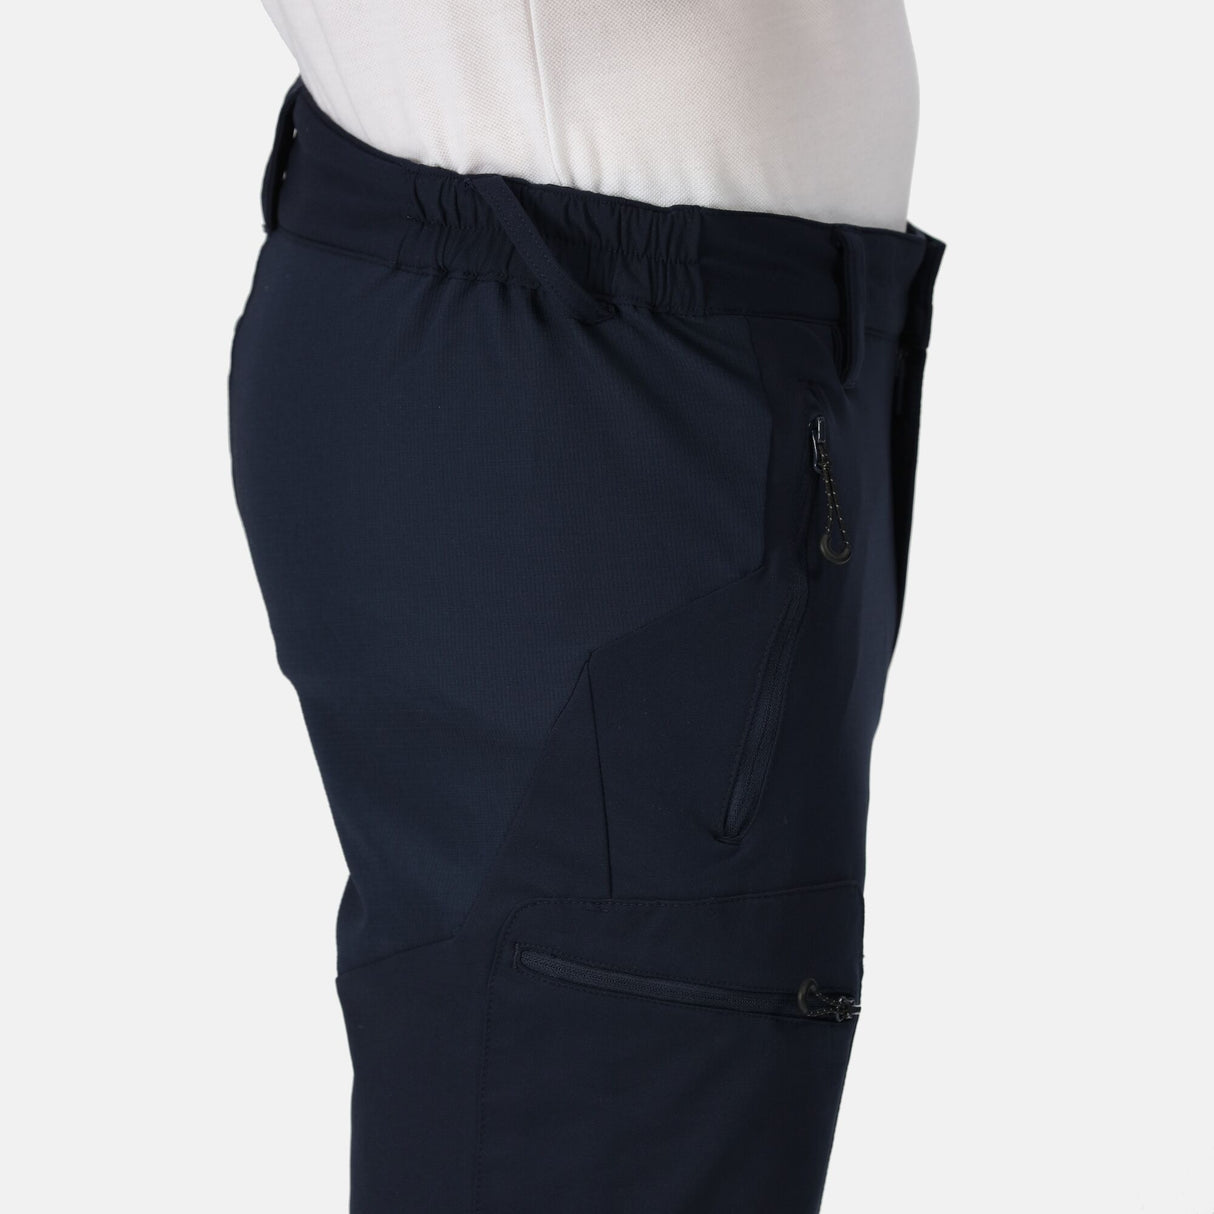 Regatta Professional Prolite Stretch Softhell Trousers